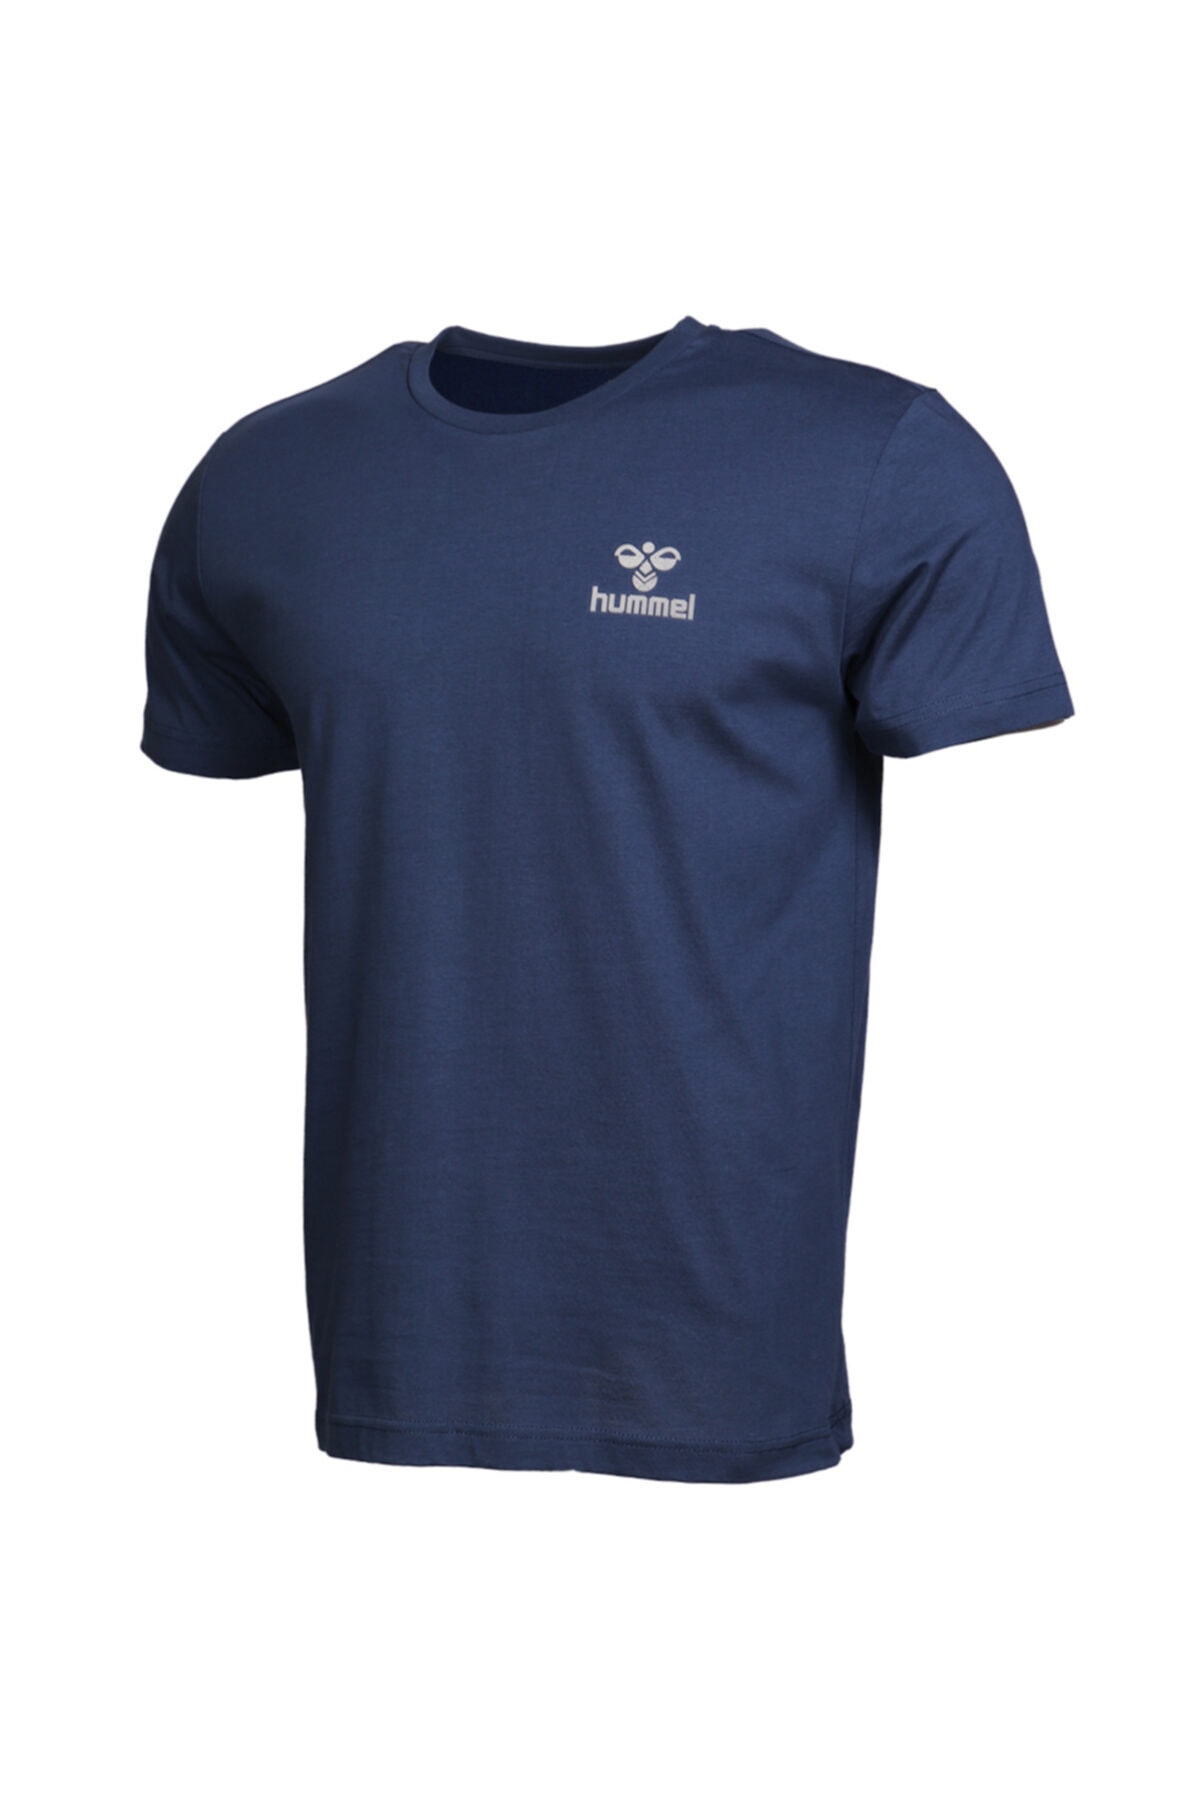 Hummel Keaton - Mens Blue T-Shirt